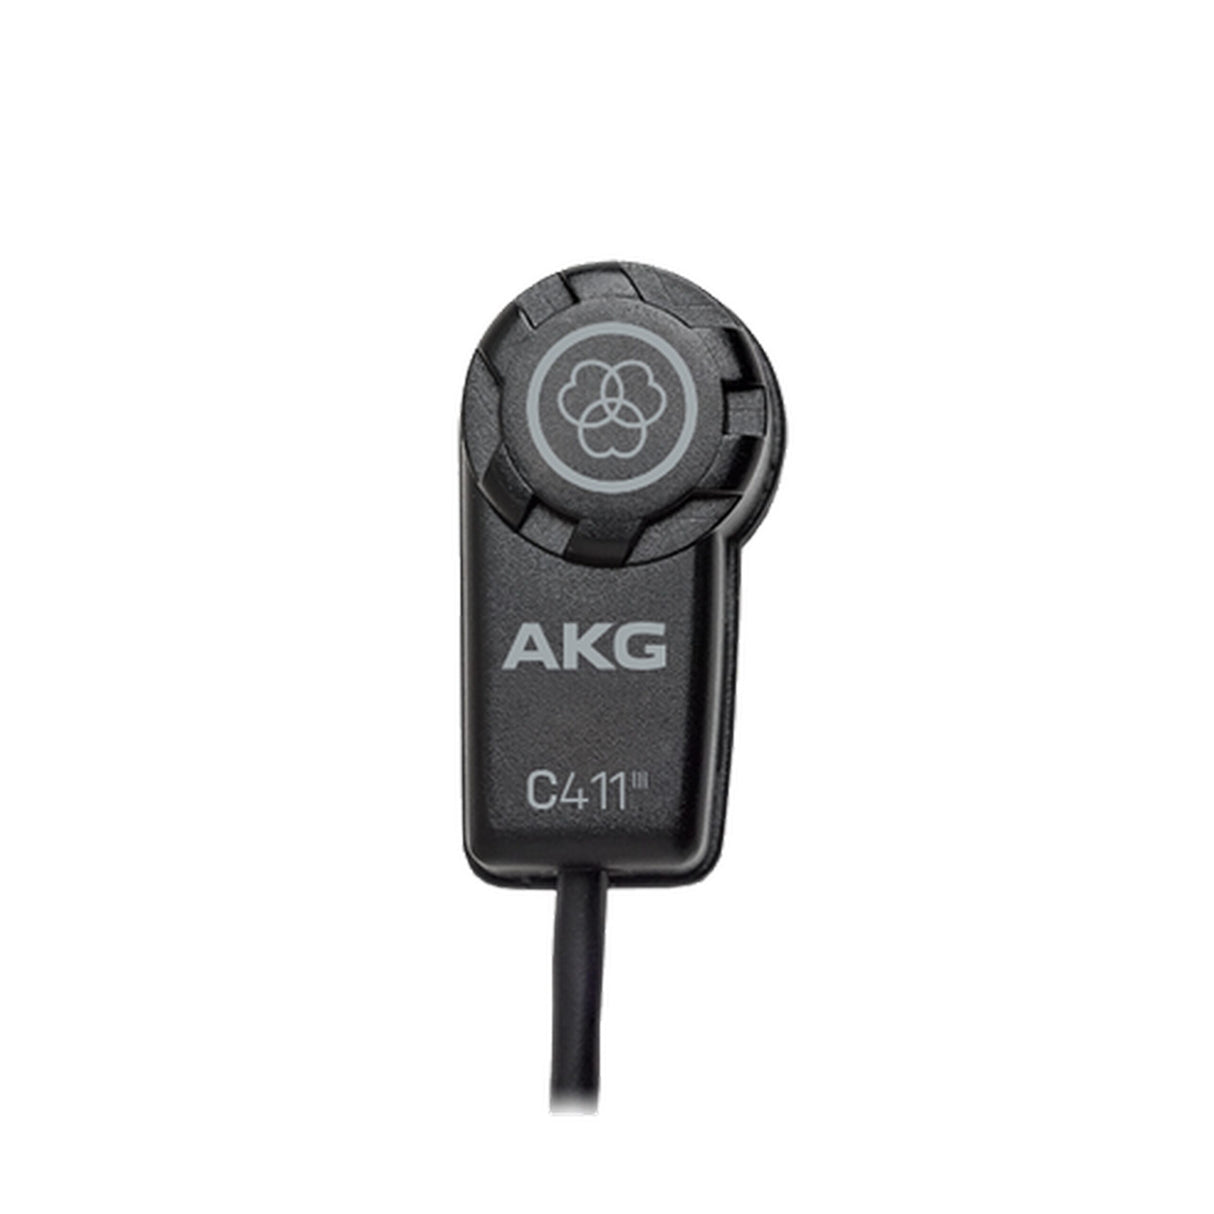 AKG C411 L High-Performance Miniature Condenser Vibration Pickup Microphone